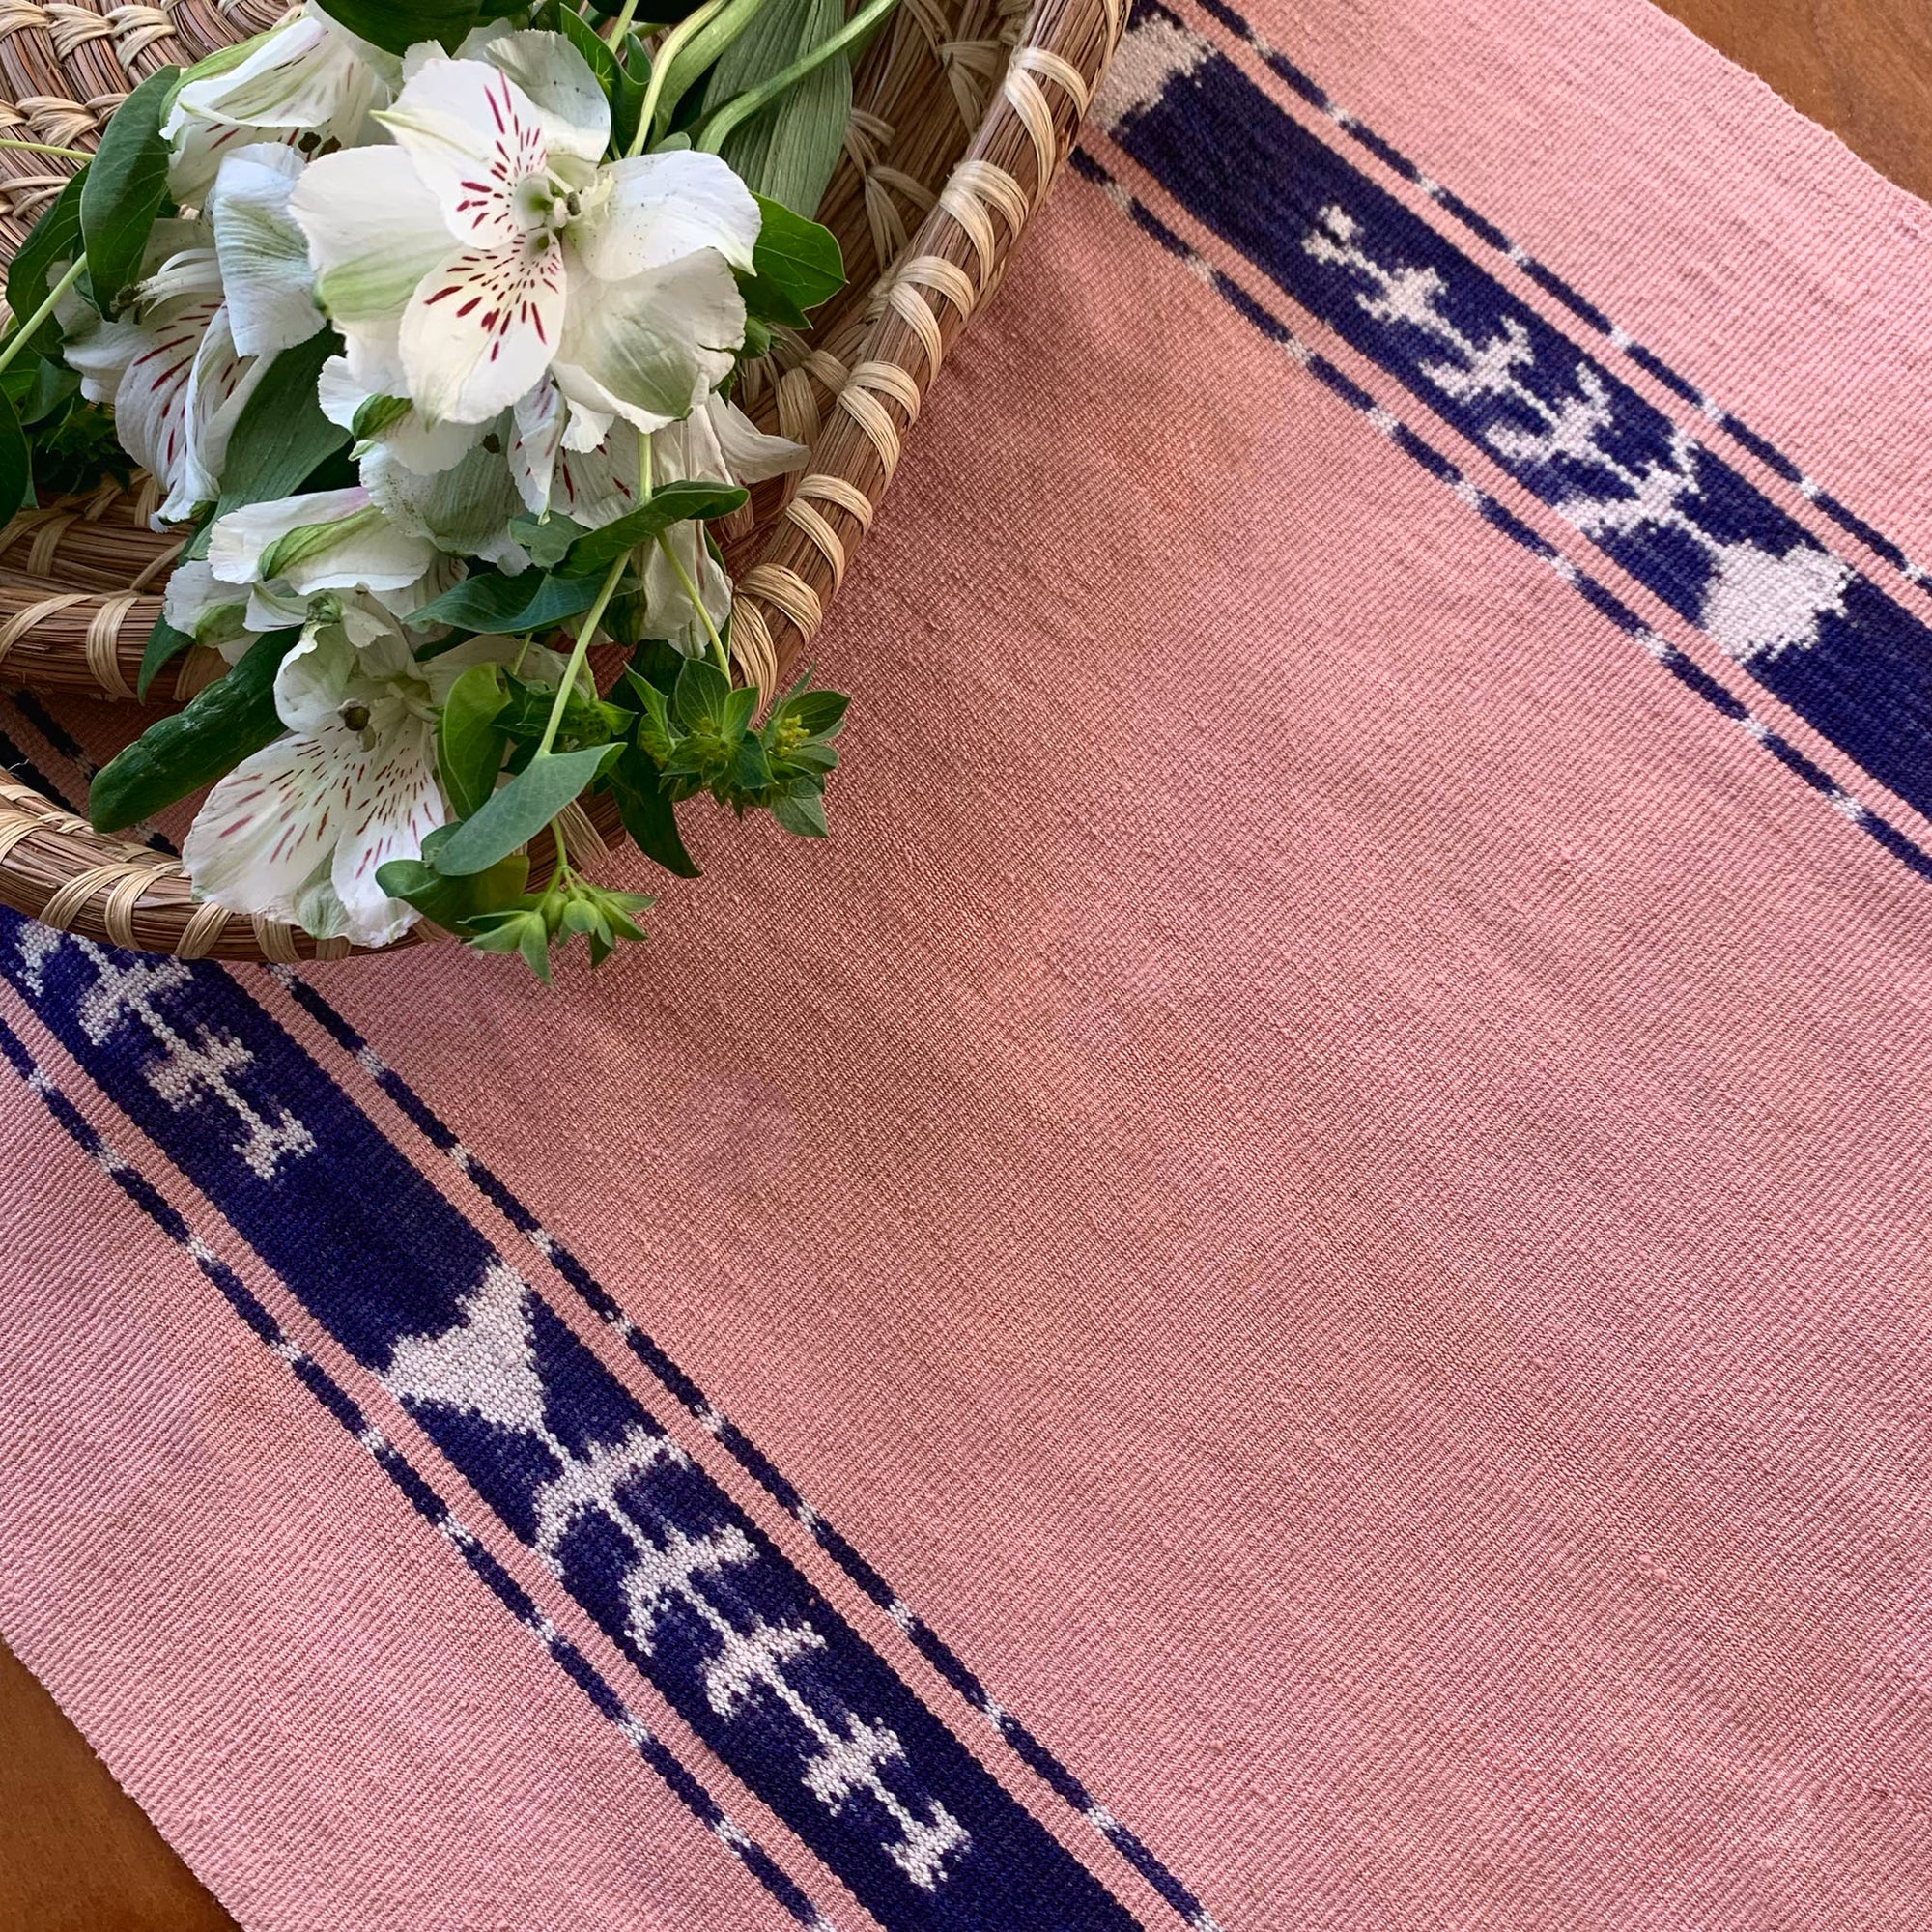 handwoven table runner blush with indigo ikat stripe